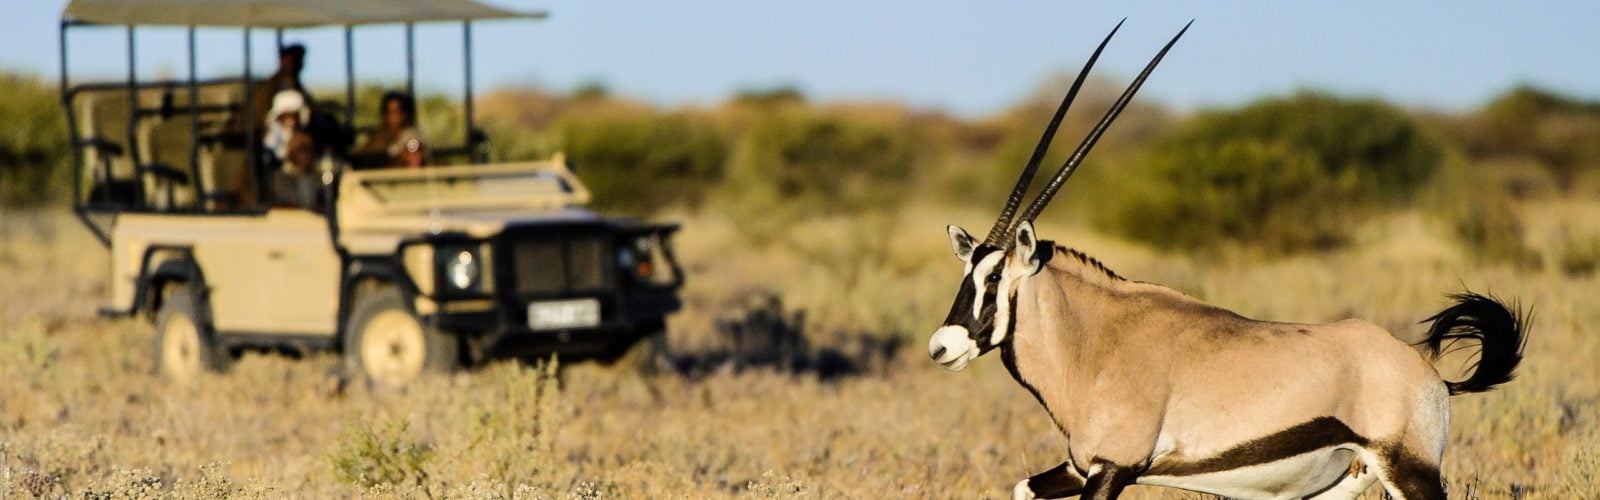 Antelope seen on safari, Central Kalahari Game Reserve, Botswana